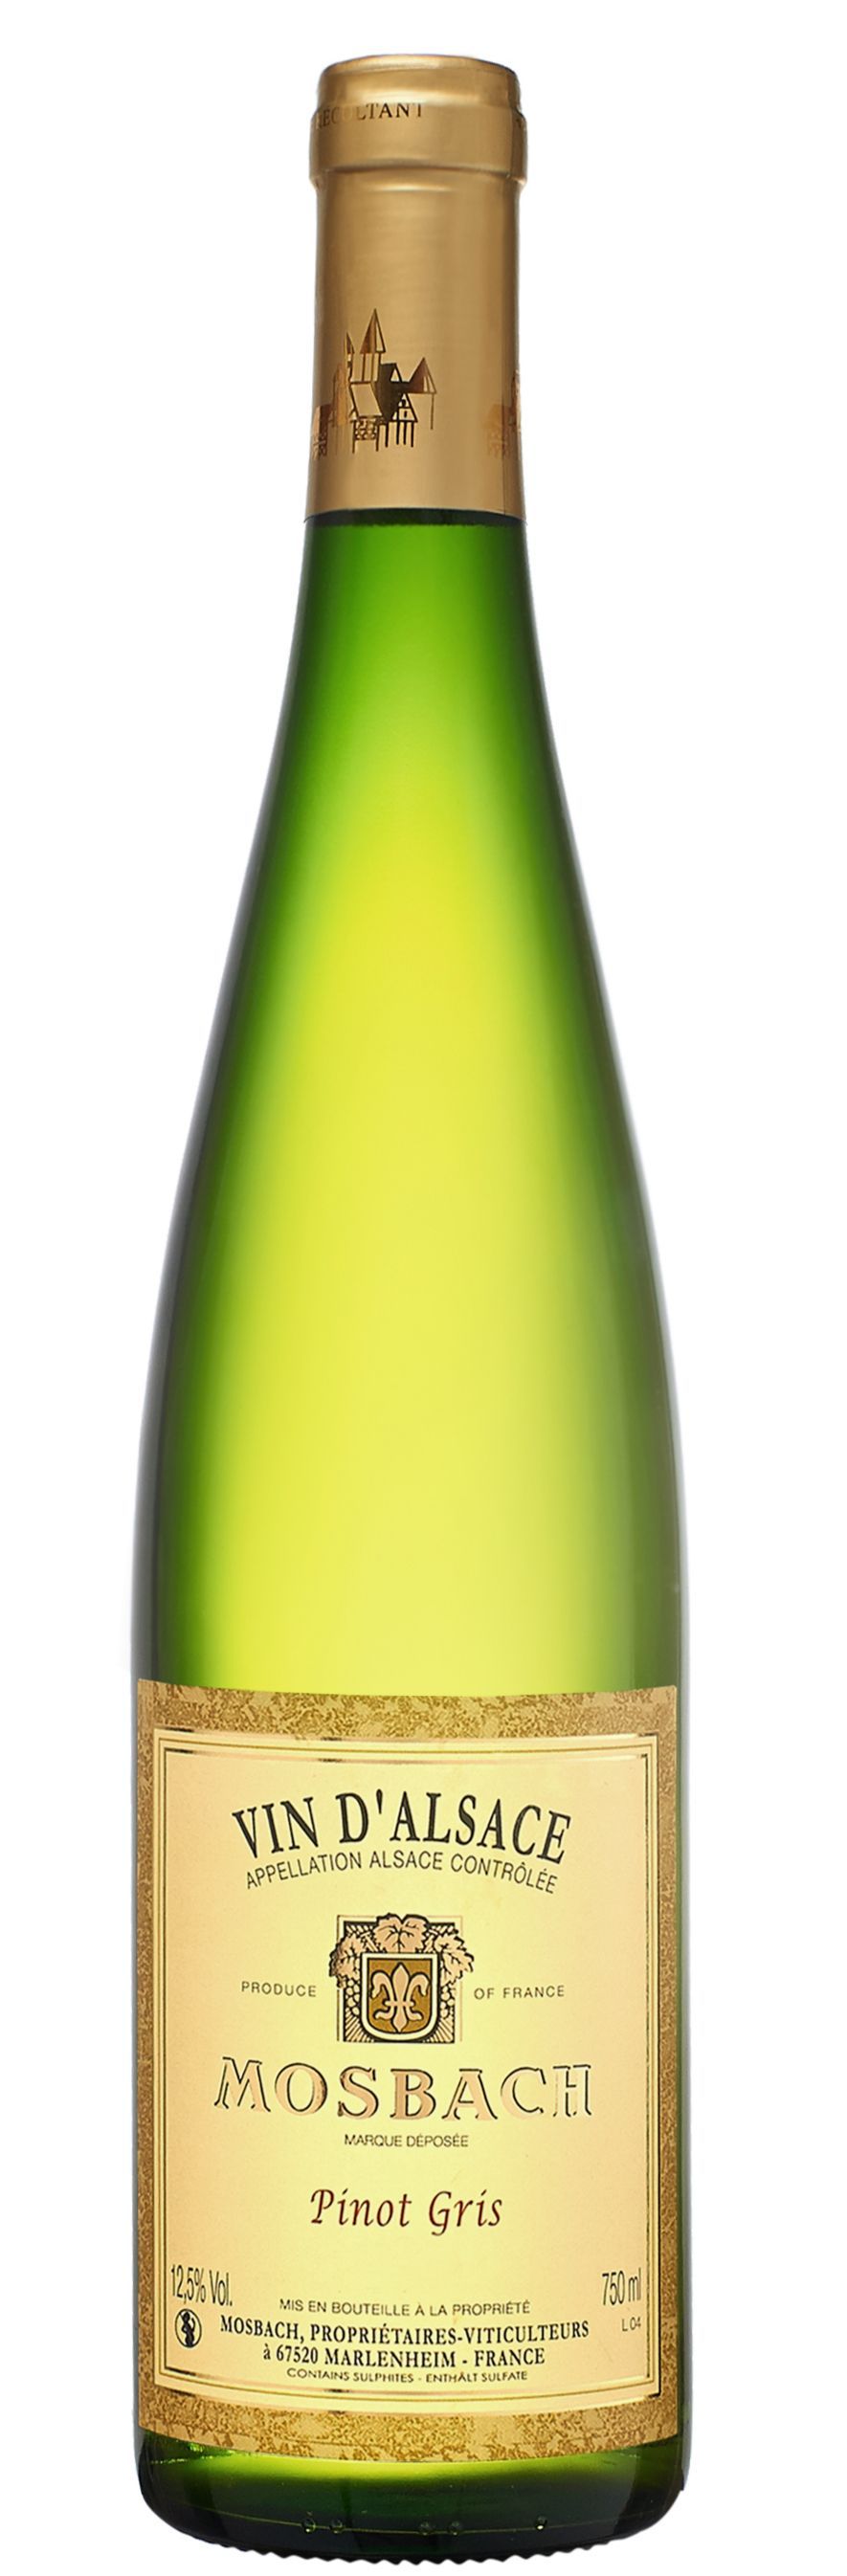 EARL MOSBACH (MARLENHEIM) Pinot Gris Mosbach, Blanc, 2020, Alsace ou Vin d'Alsace. Bottle image